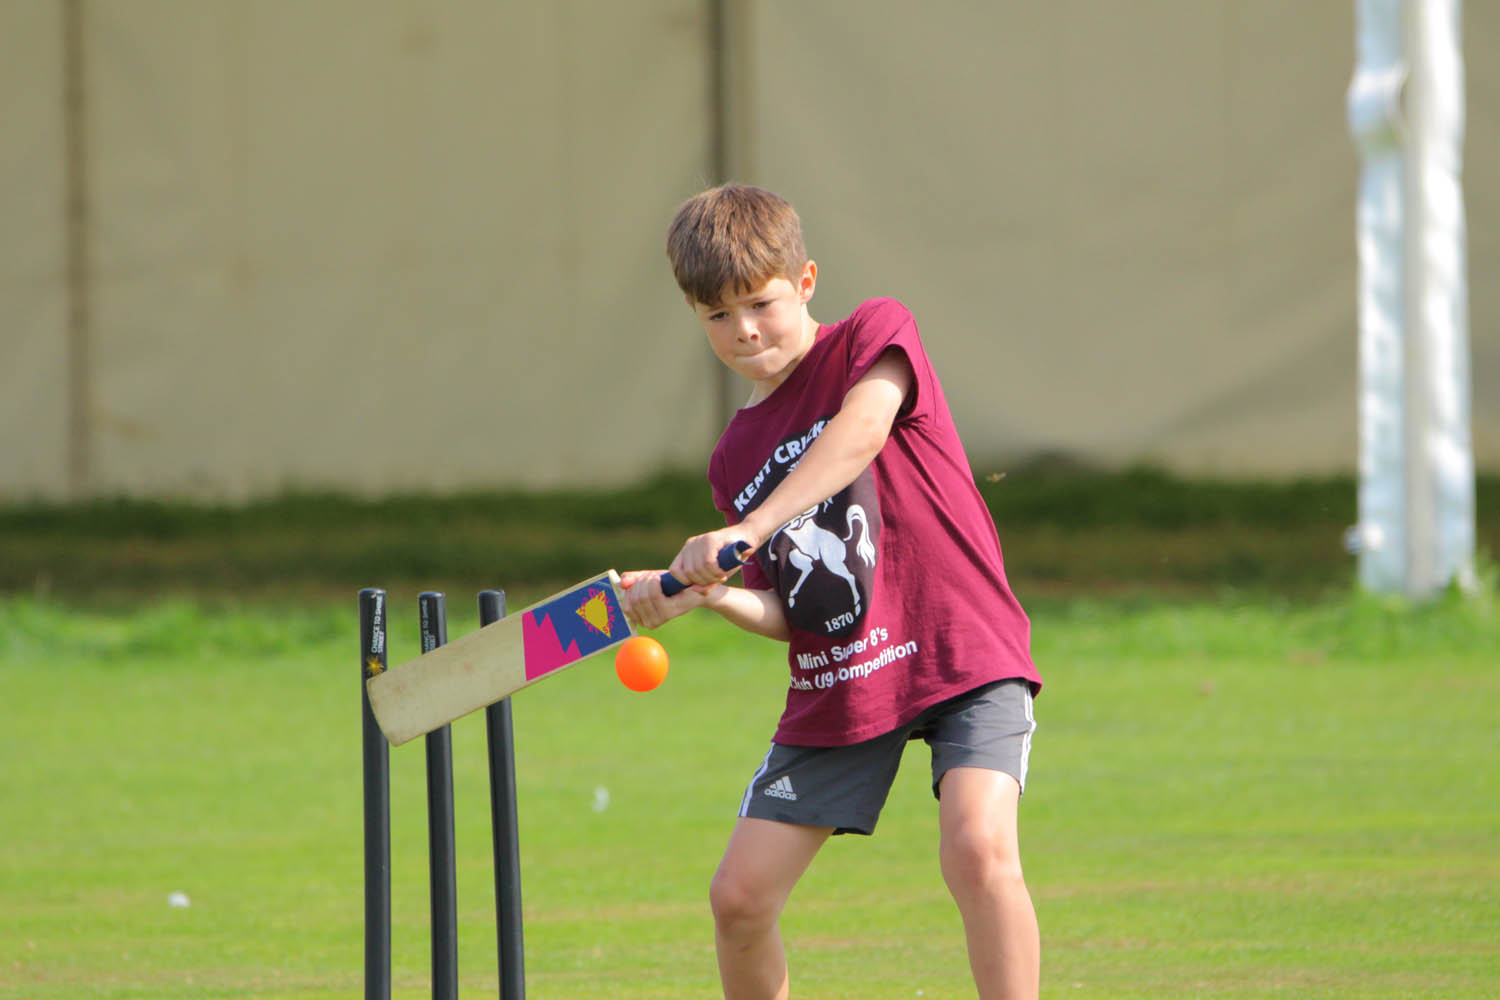 Boy playing cricket, hitting a cricket ball with a bat